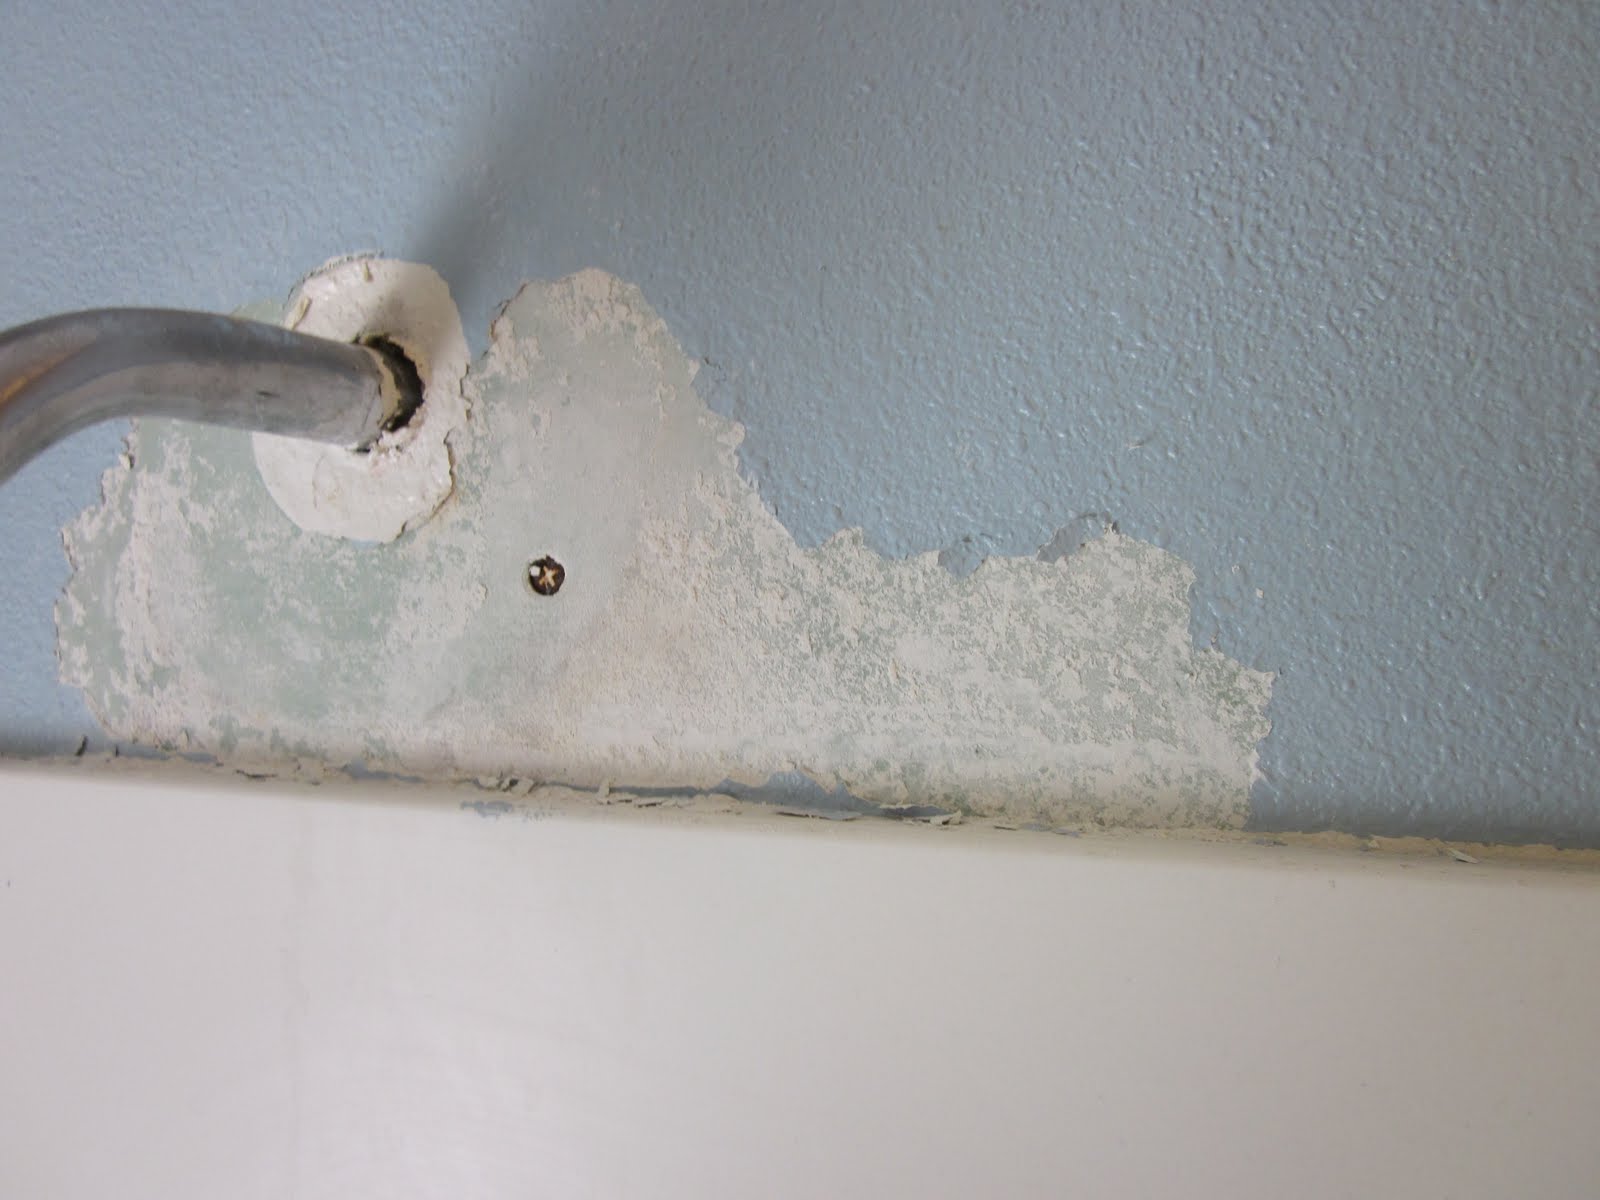 Drywall Repair After Removing Wallpaper Is Primer